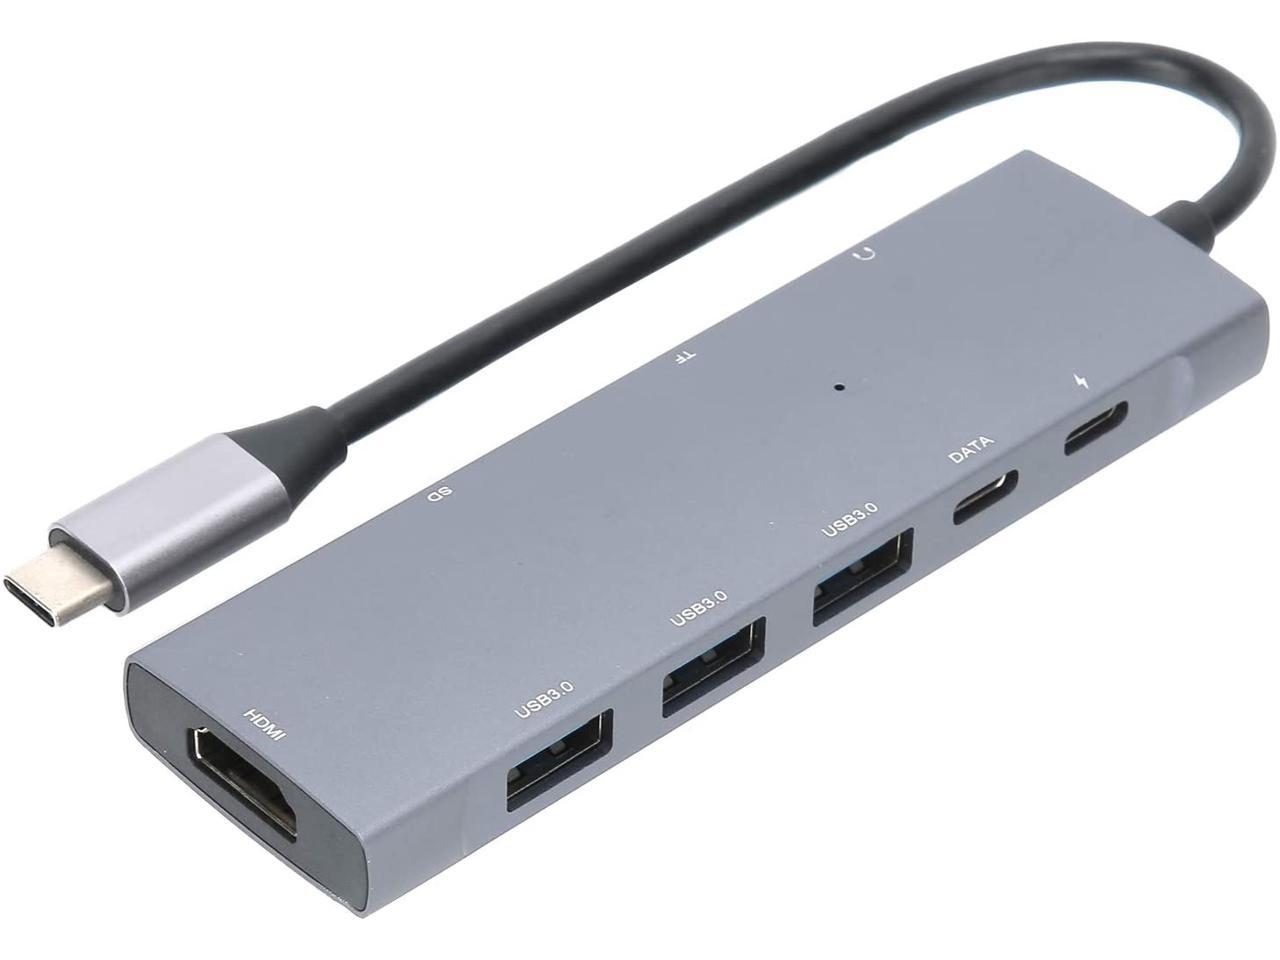 USB Hub awstroe USB 3.0 Hub Hub Computer for Notebook Display Equipment for Phone Multi-Function Type-C Hub Docking Station 